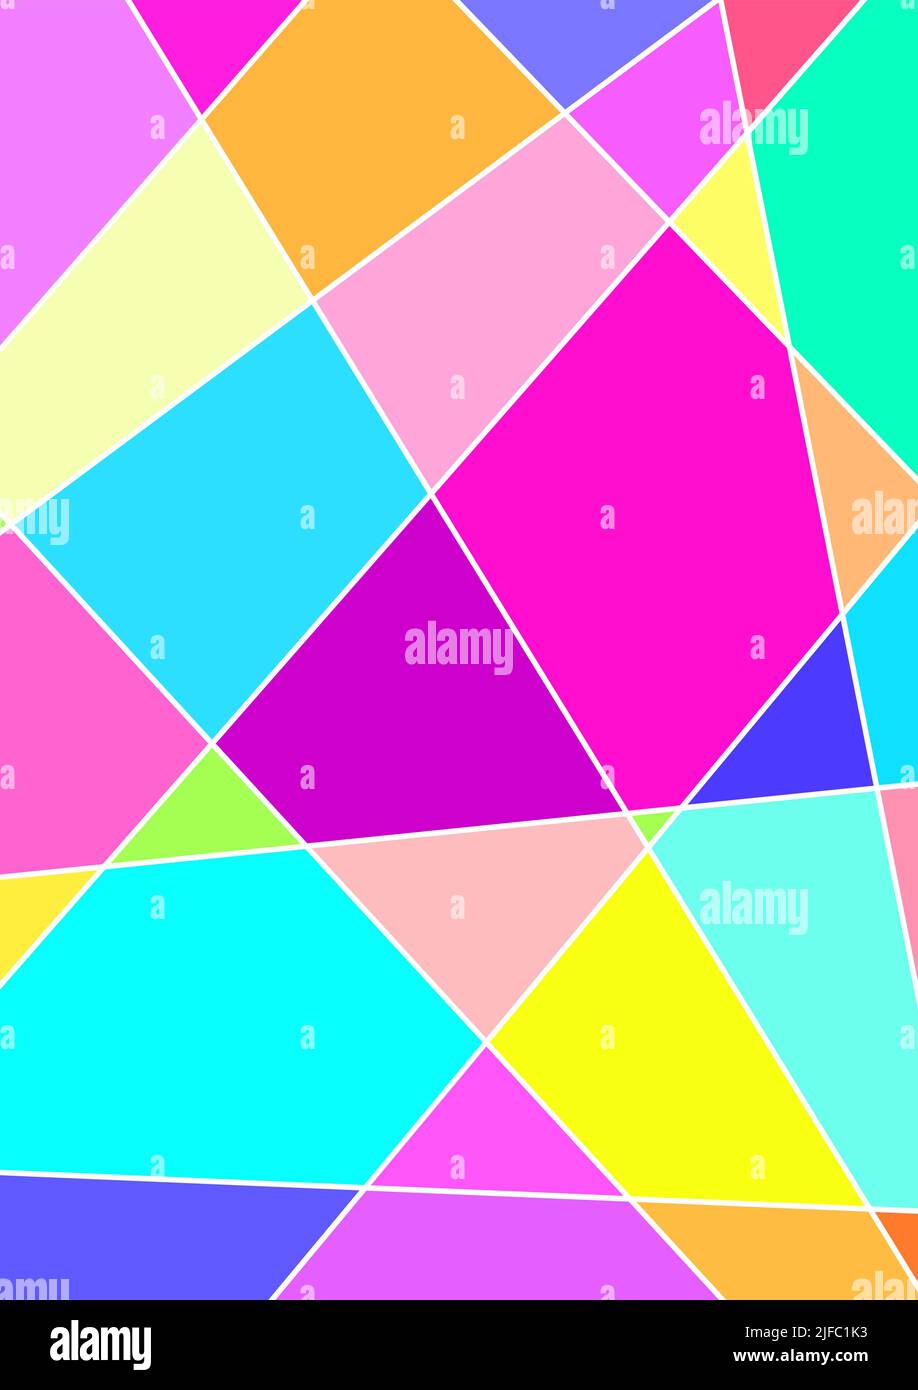 Abstrakt Hintergrund Textur Dreieck mehrfarbige Polygon Hintergrund Grafik Design Präsentation Muster Vektor Illustration Stock Vektor